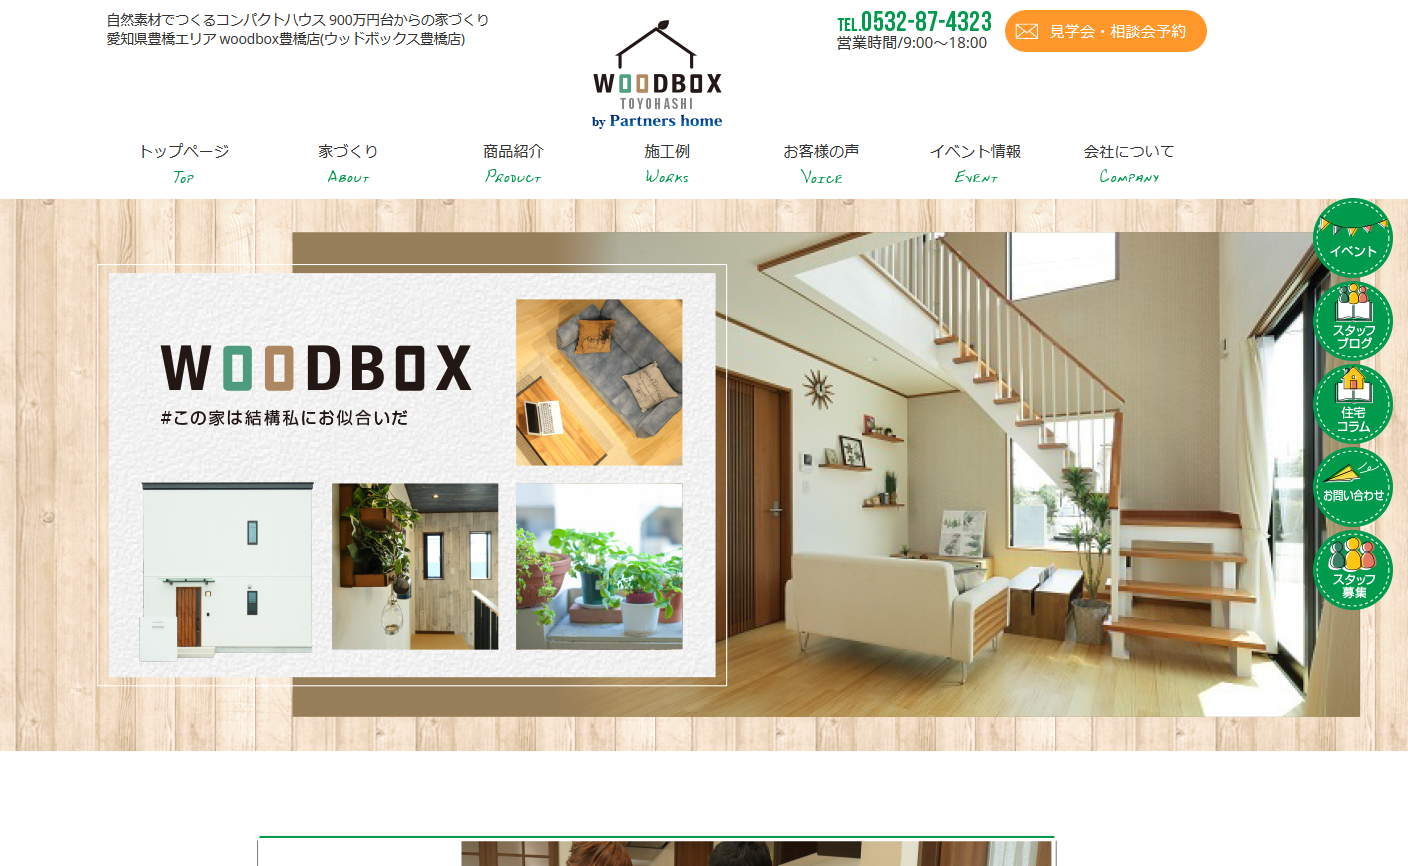 WOODBOX加盟店 ウッドボックス 豊橋店 ホームページを公開いたしました。